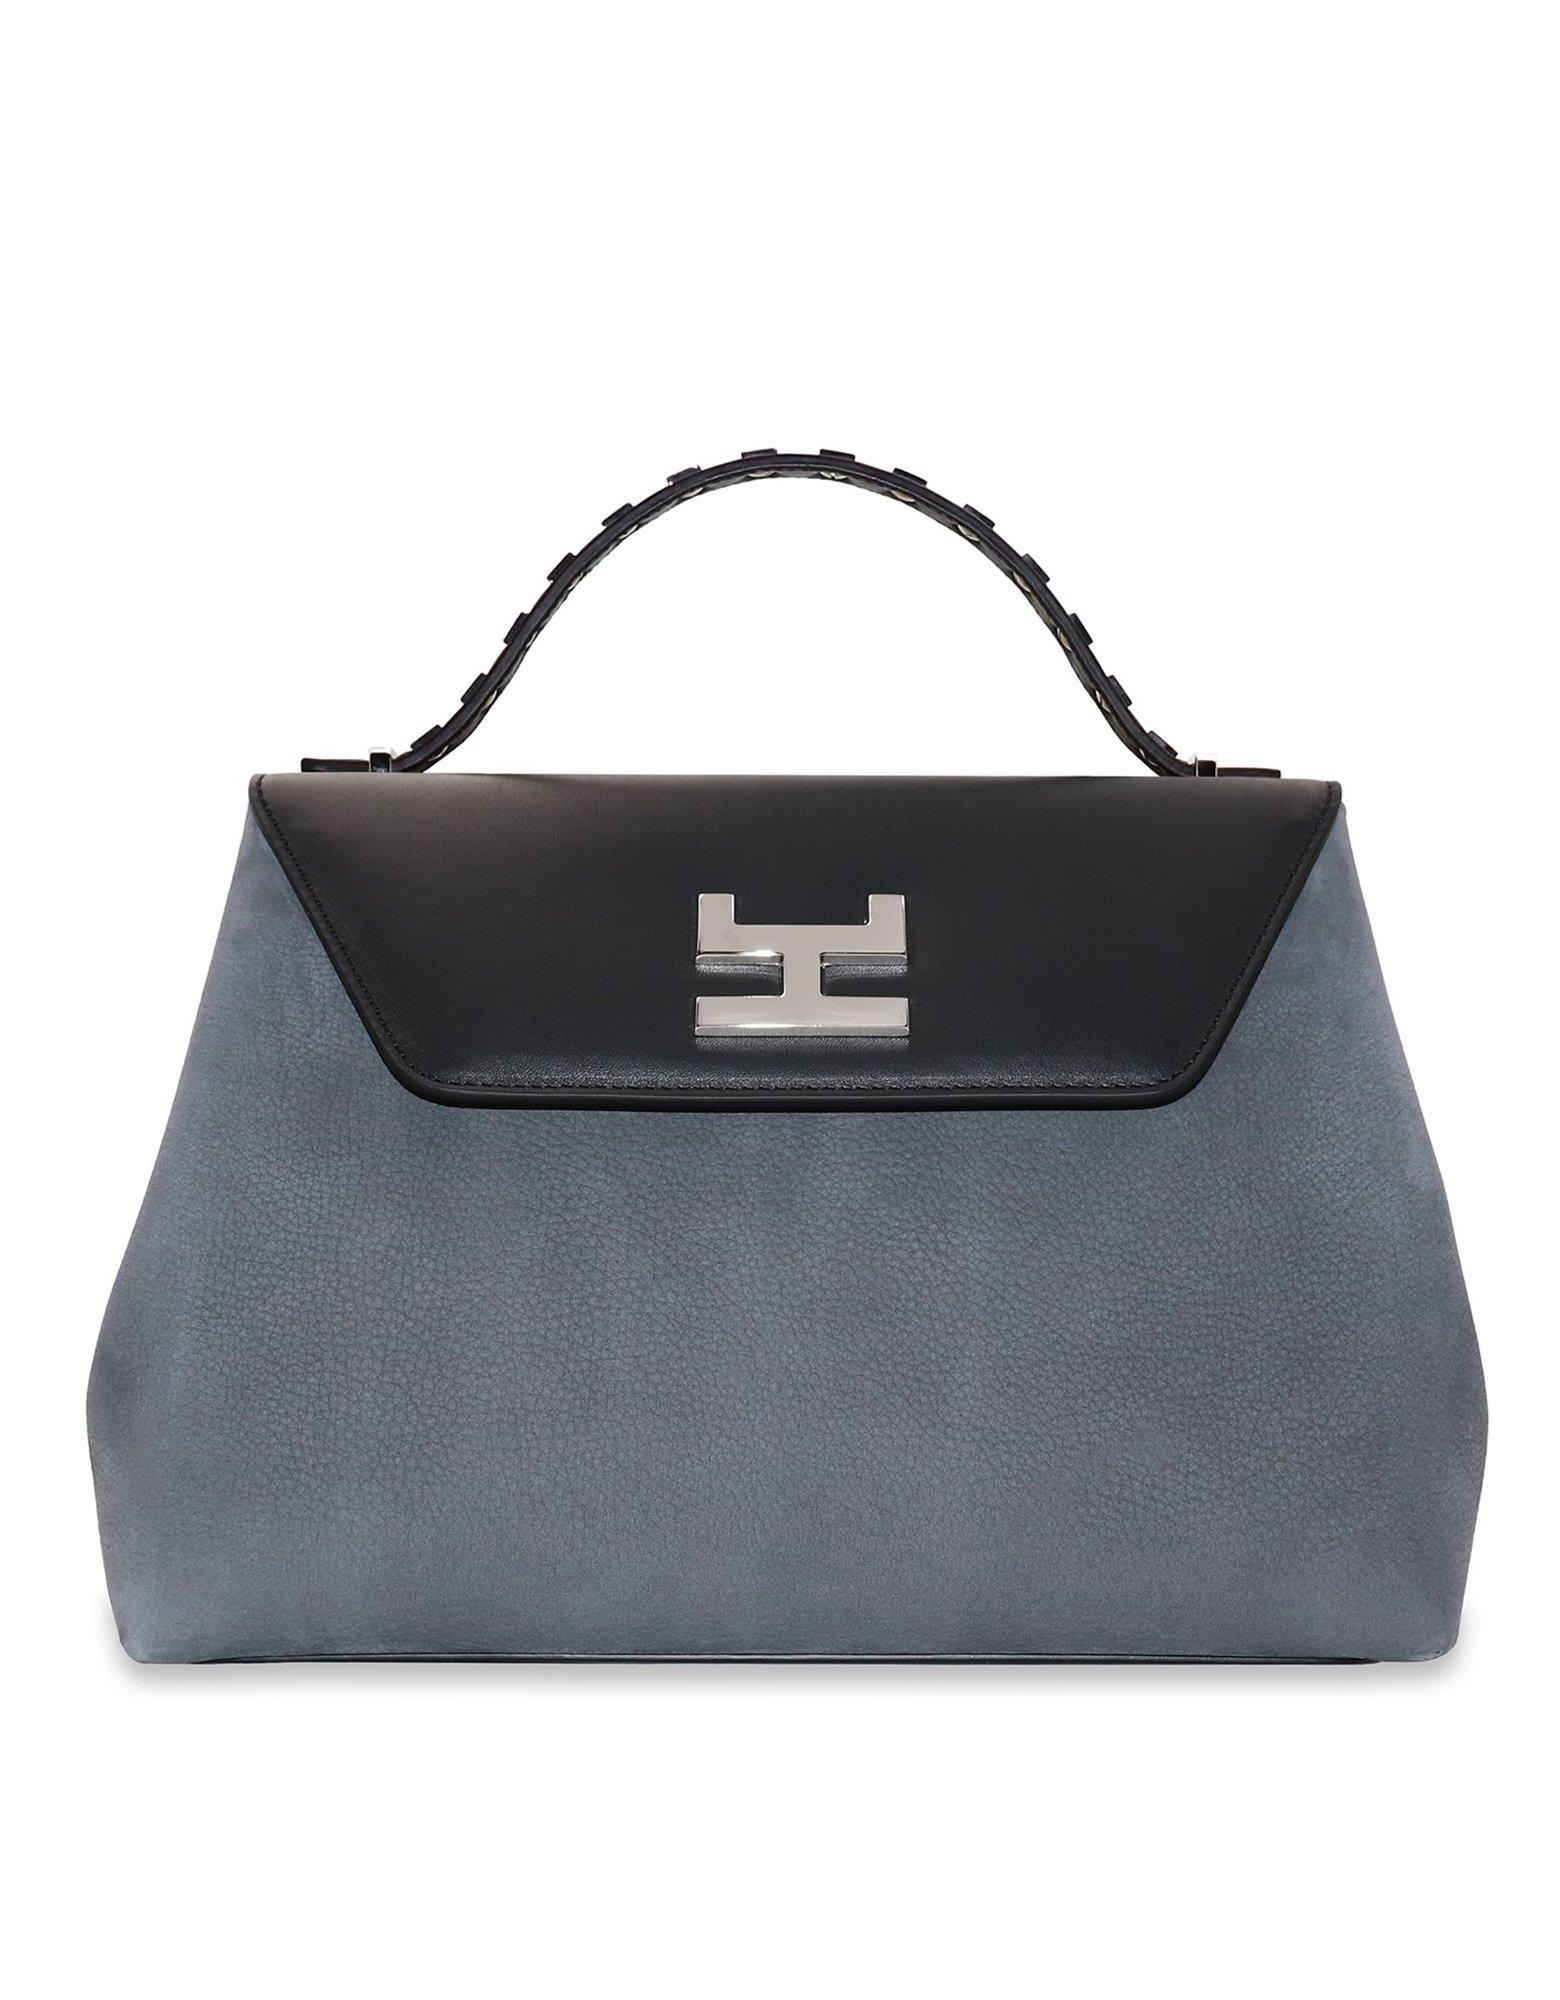 Hemcael Canie M Nubuck Leather Top Handle Bag